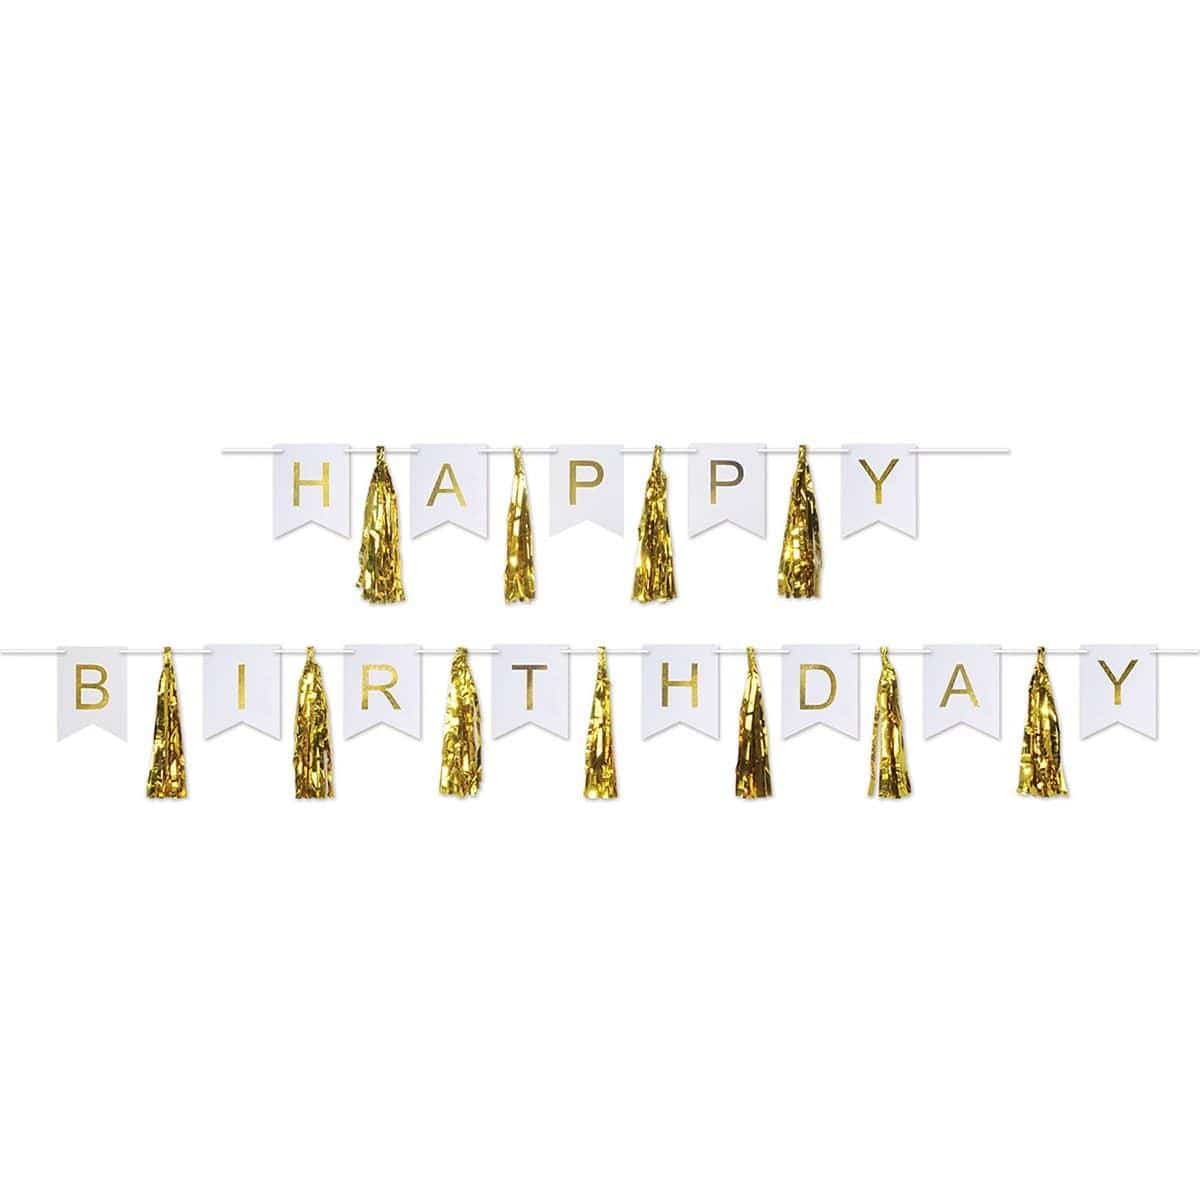 Buy General Birthday Happy Birthday Tassel Banner sold at Party Expert